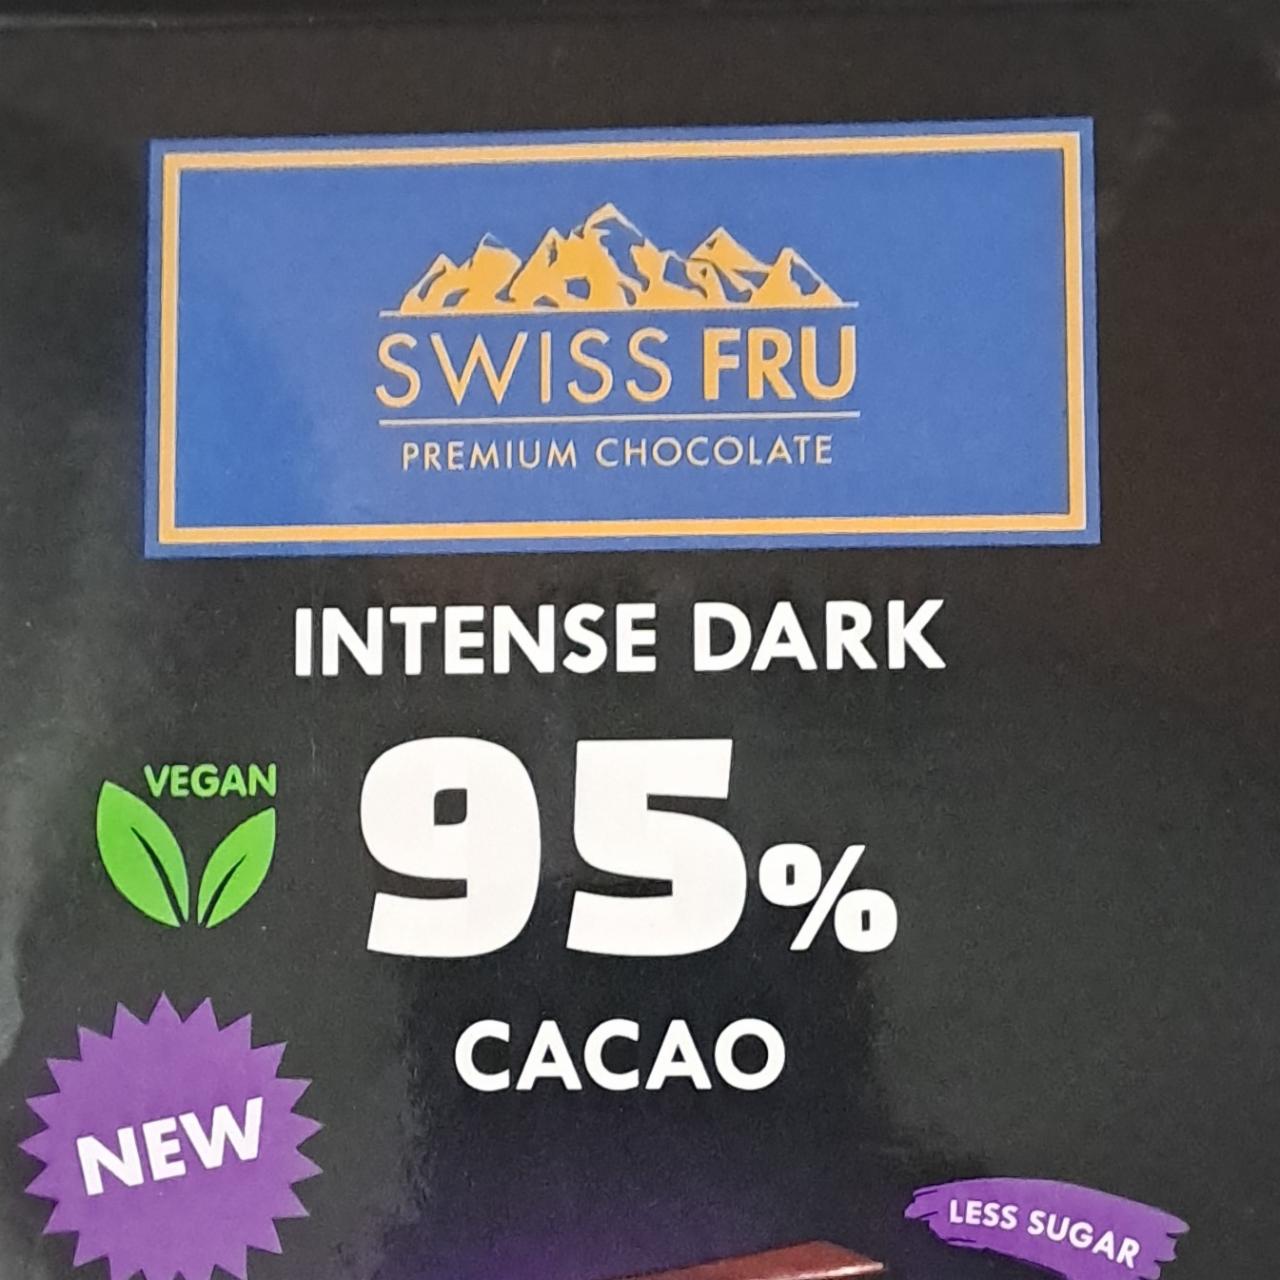 Fotografie - Intense dark 95% cacao premium chocolate Swiss Fru